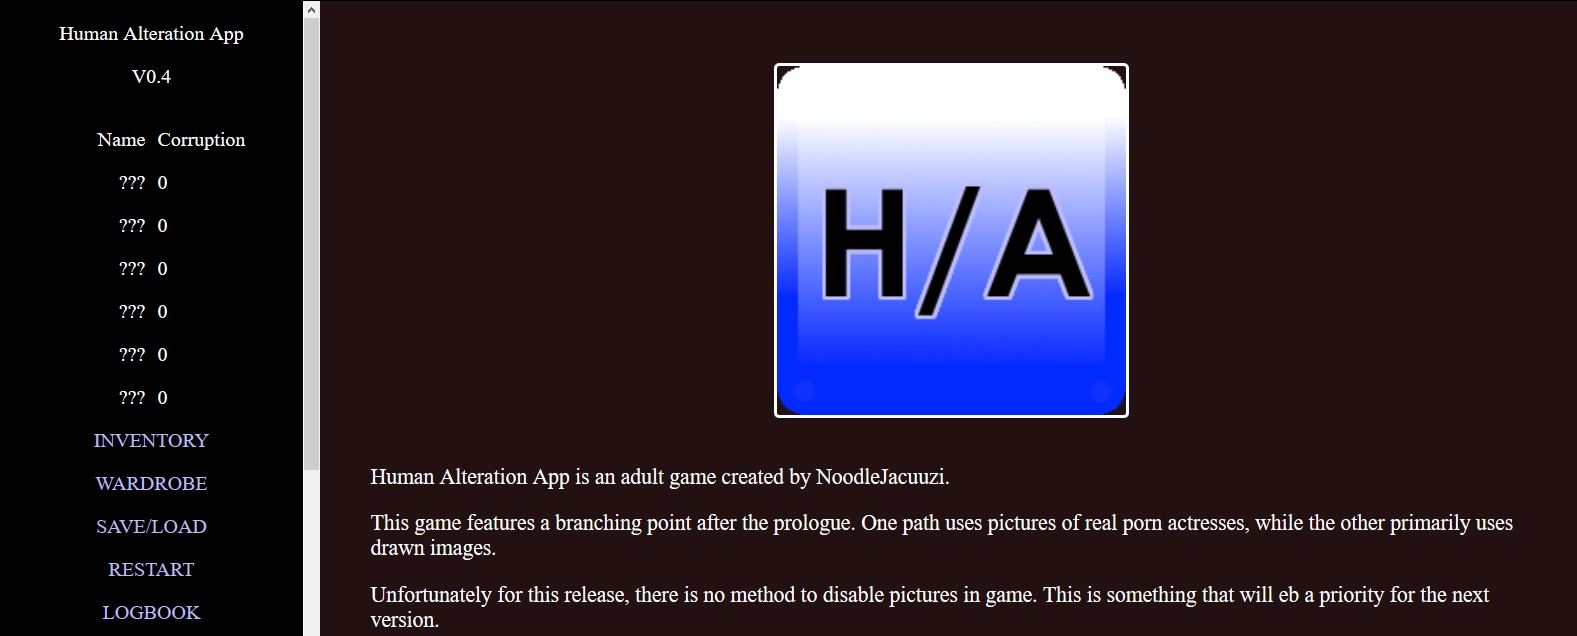 HTML] Human Alteration App - v1.3 by NoodleJacuzzi 18+ Adult xxx Porn Game  Download